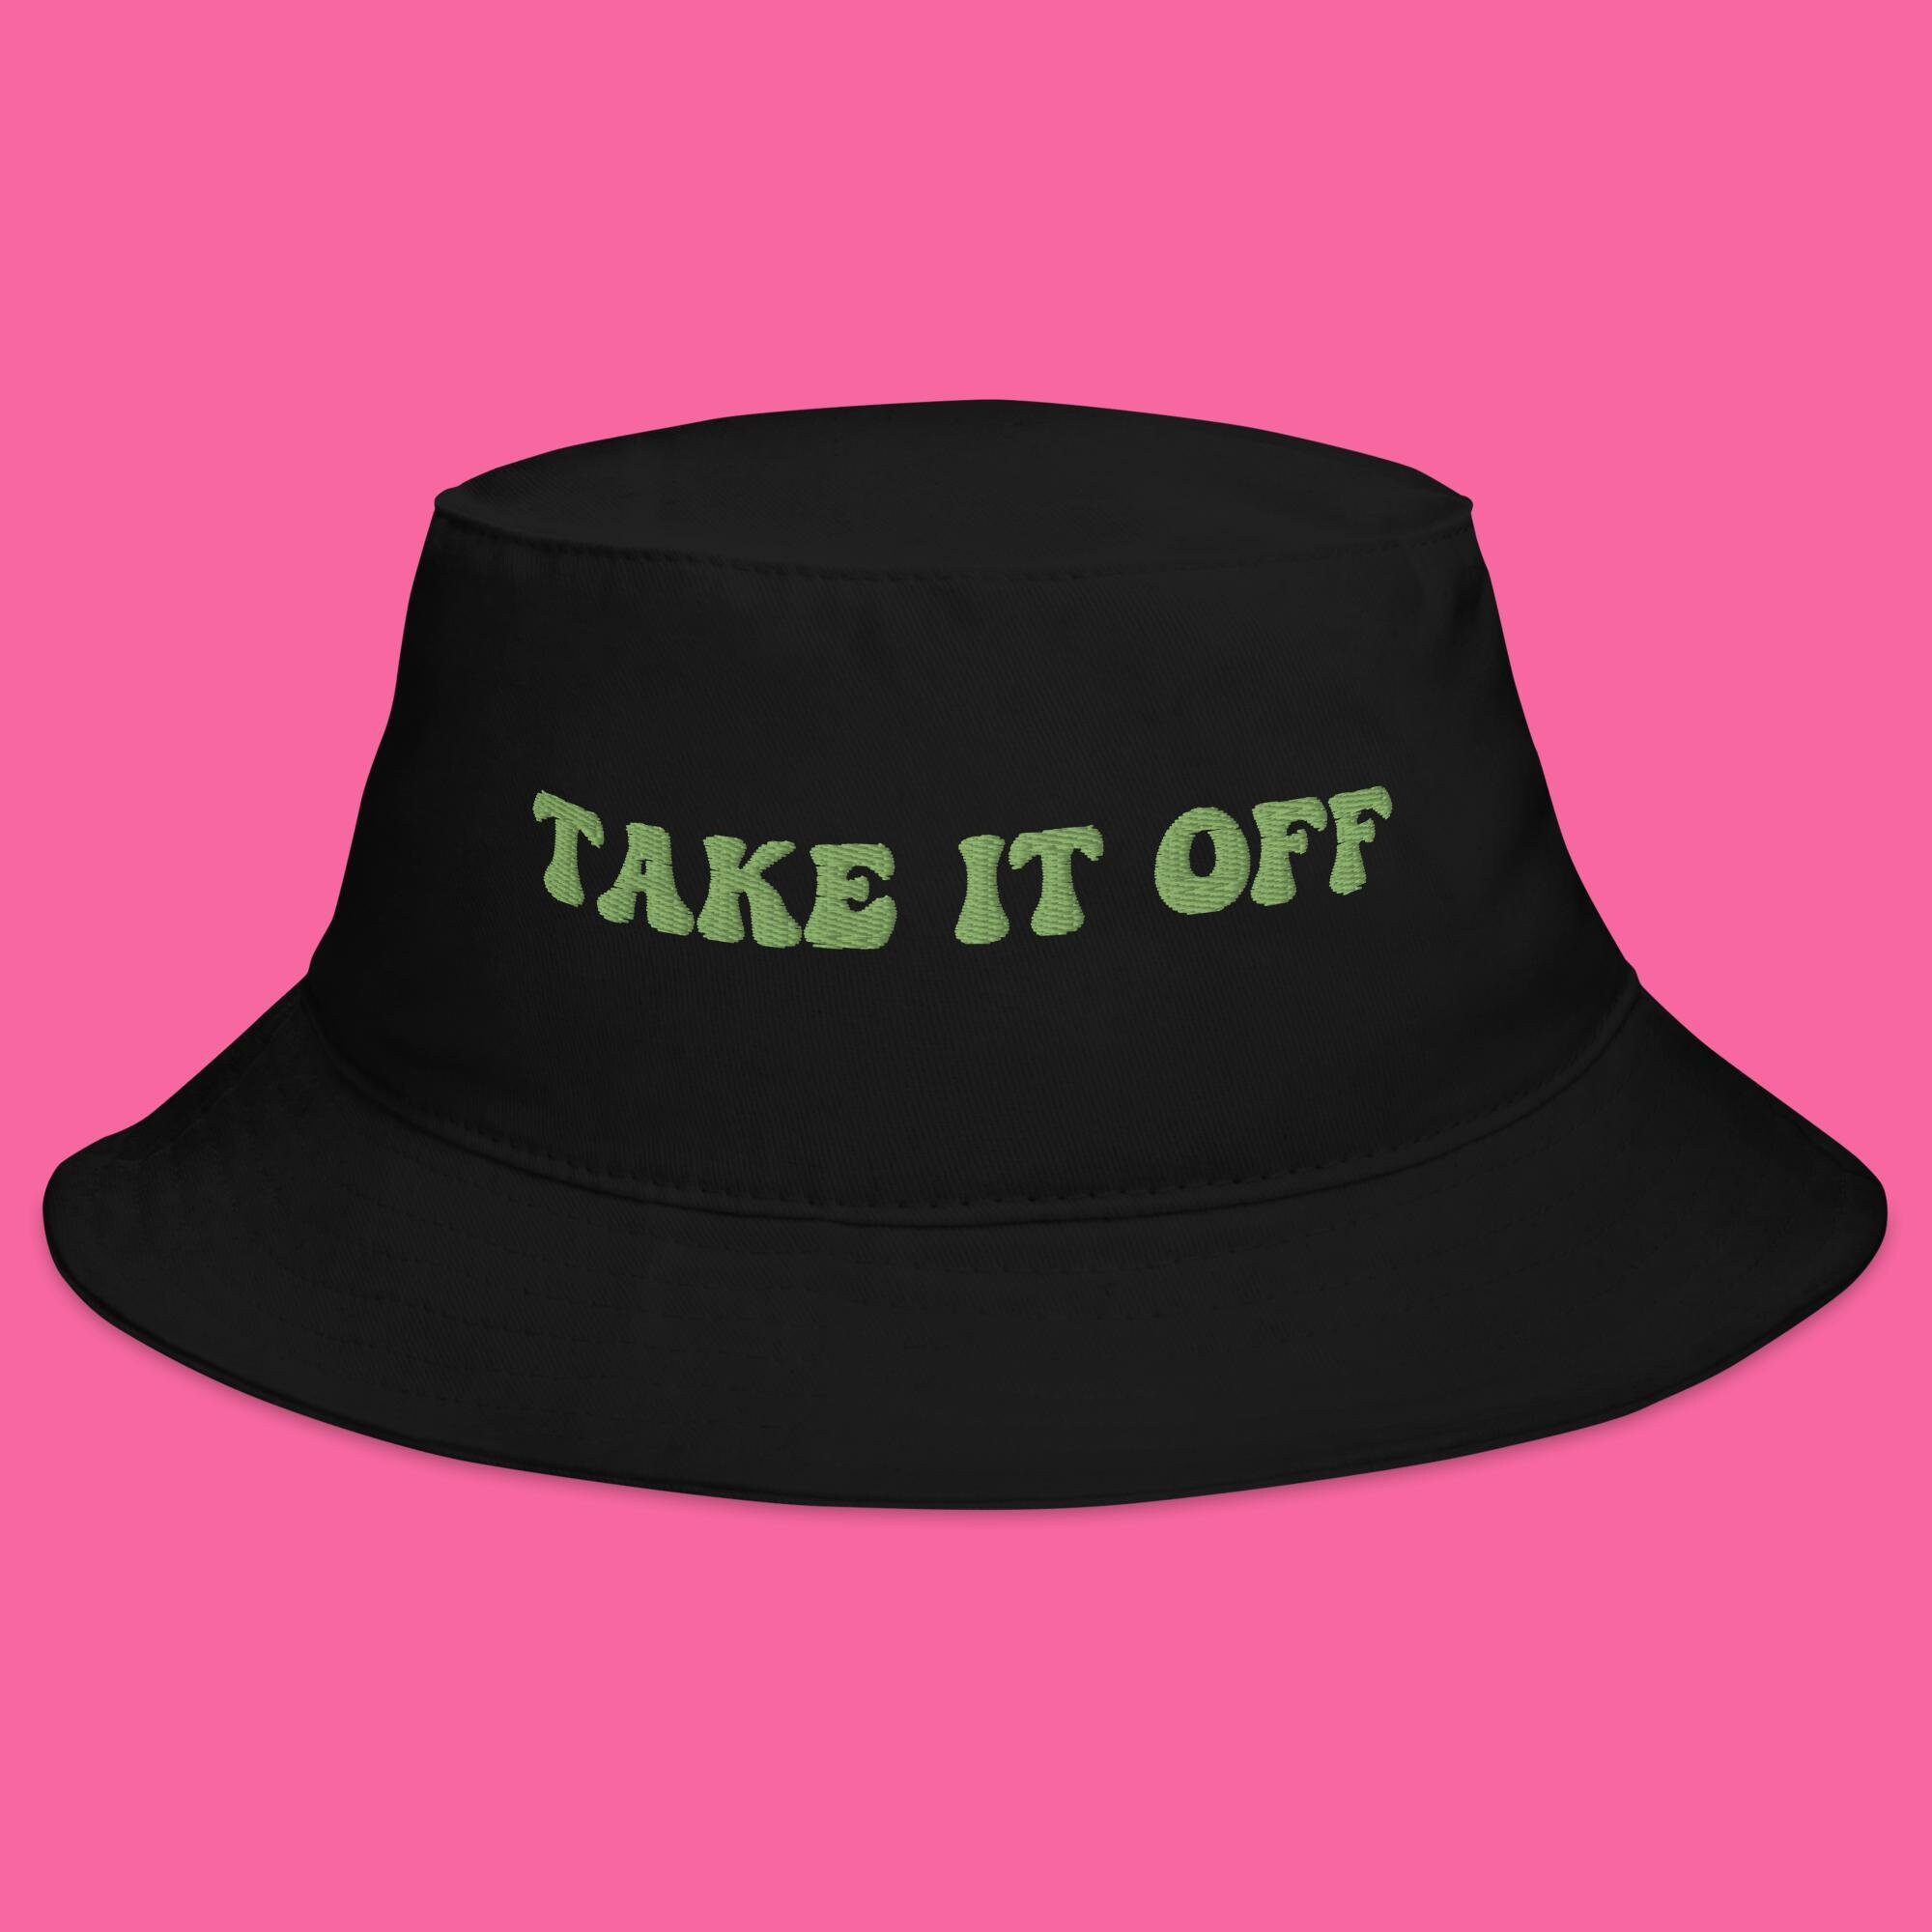 Hat, Bucket Hat, House Bucket It Fisher EDM Hat DJ Etsy Fisher Hat Hat, Bucket - off Hat, Hat, Music Music Take DJ Electronic Hat, Rave